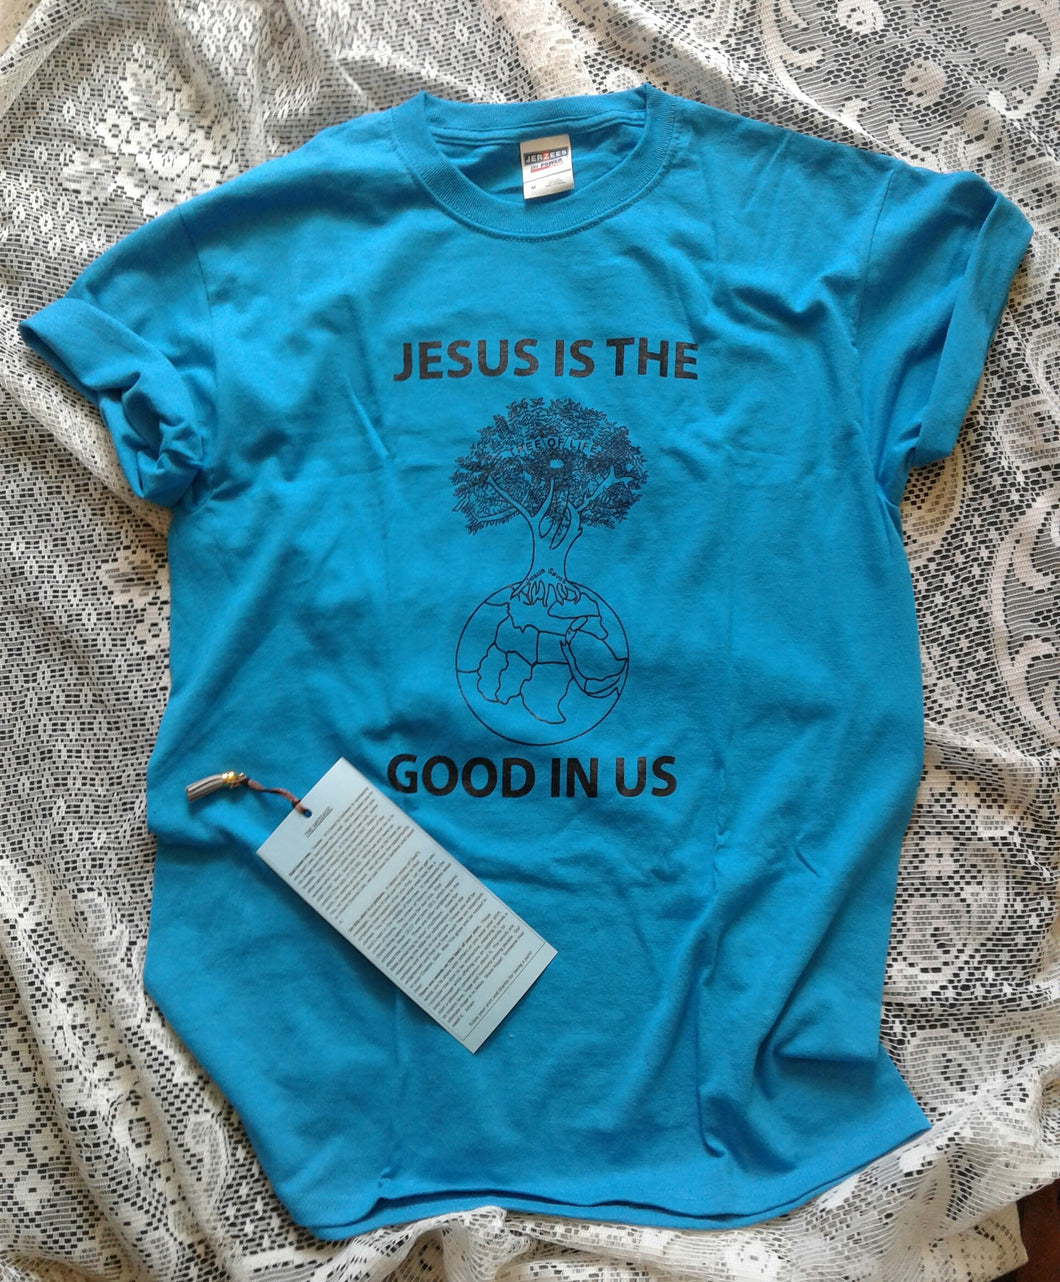 Unity Shirt- Thank God for kindness